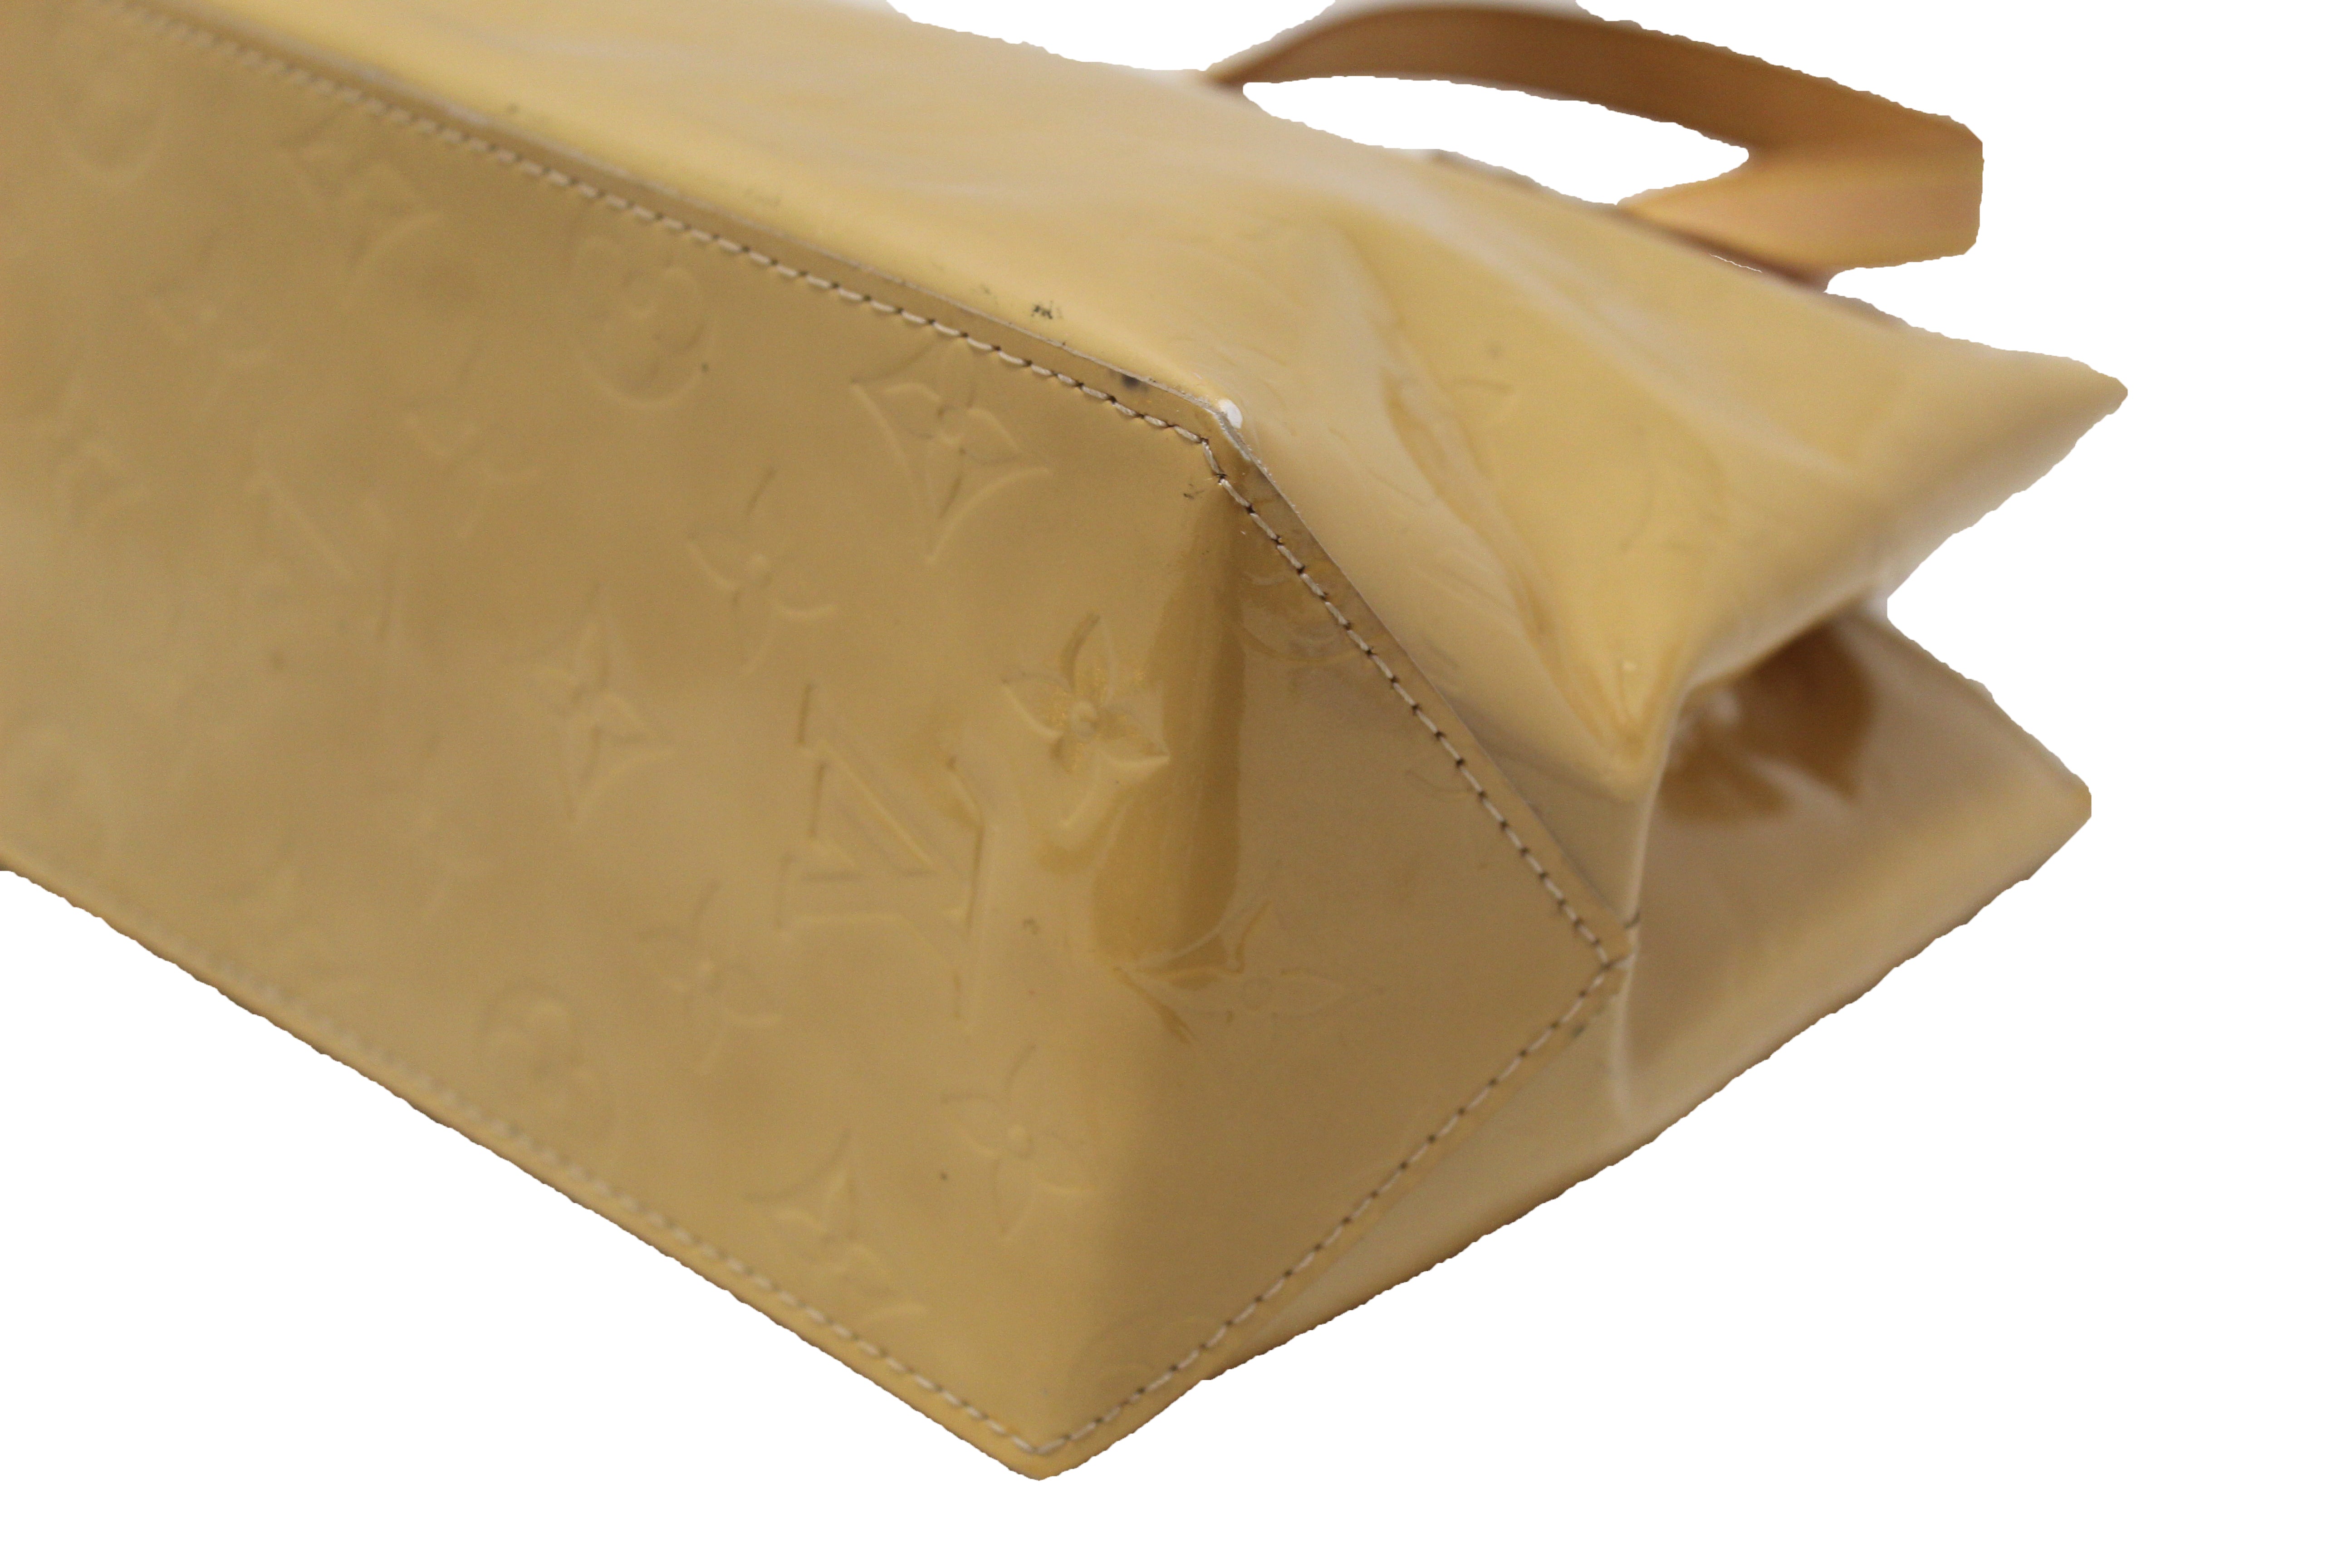 Louis Vuitton Vernis Reade Lead PM Perle Cream Beige Ivory tote hand bag  Patent